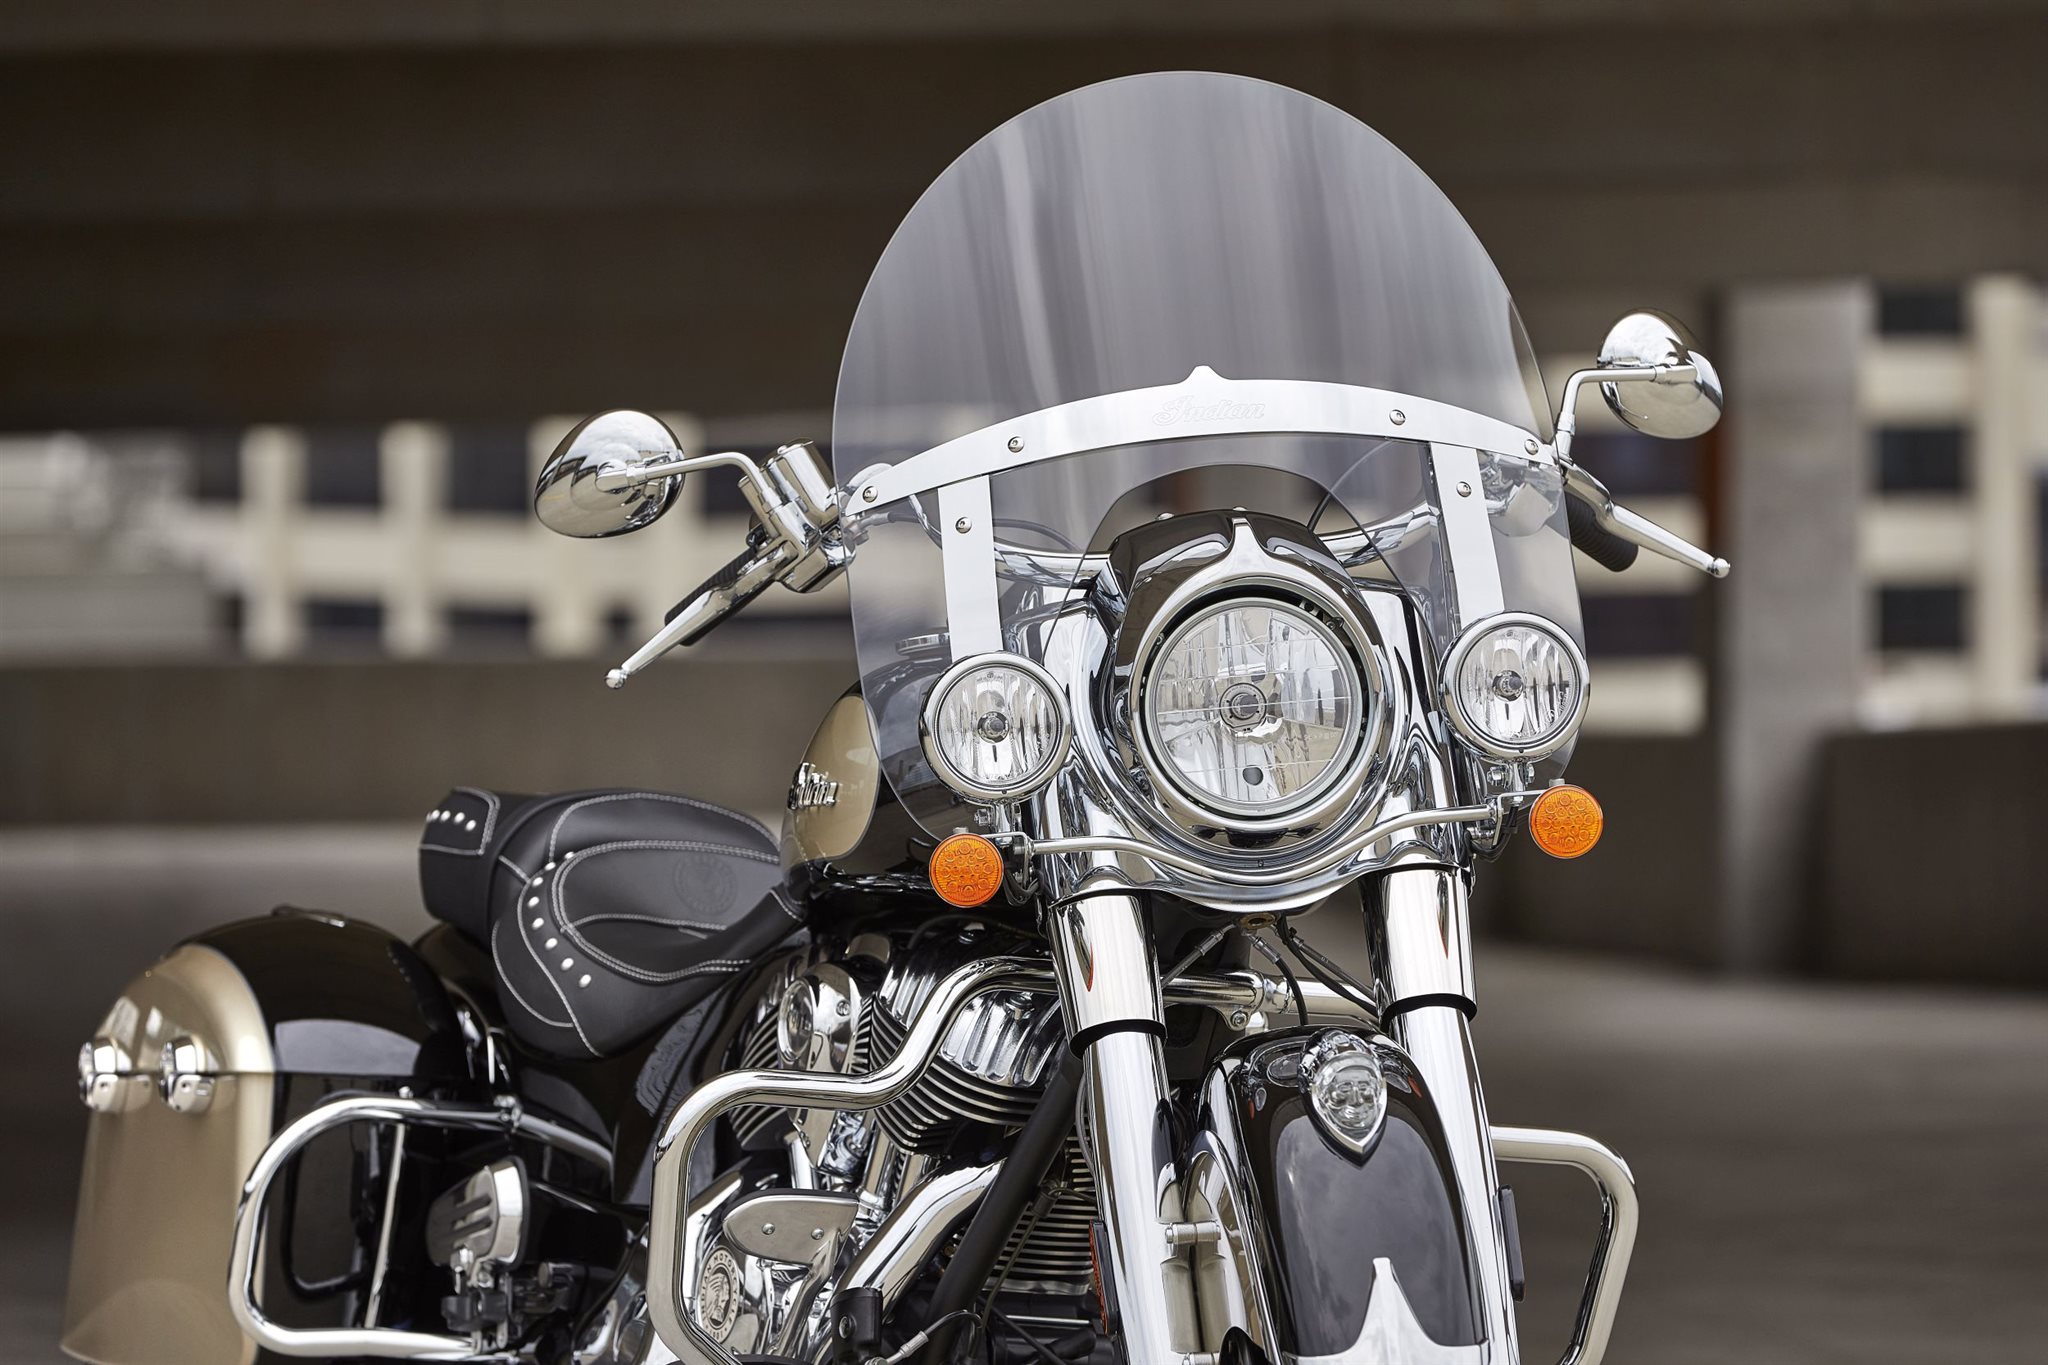 Motorrad Vergleich Indian Springfield 2021 Vs Harley Davidson Road King Classic Flhrc 2020